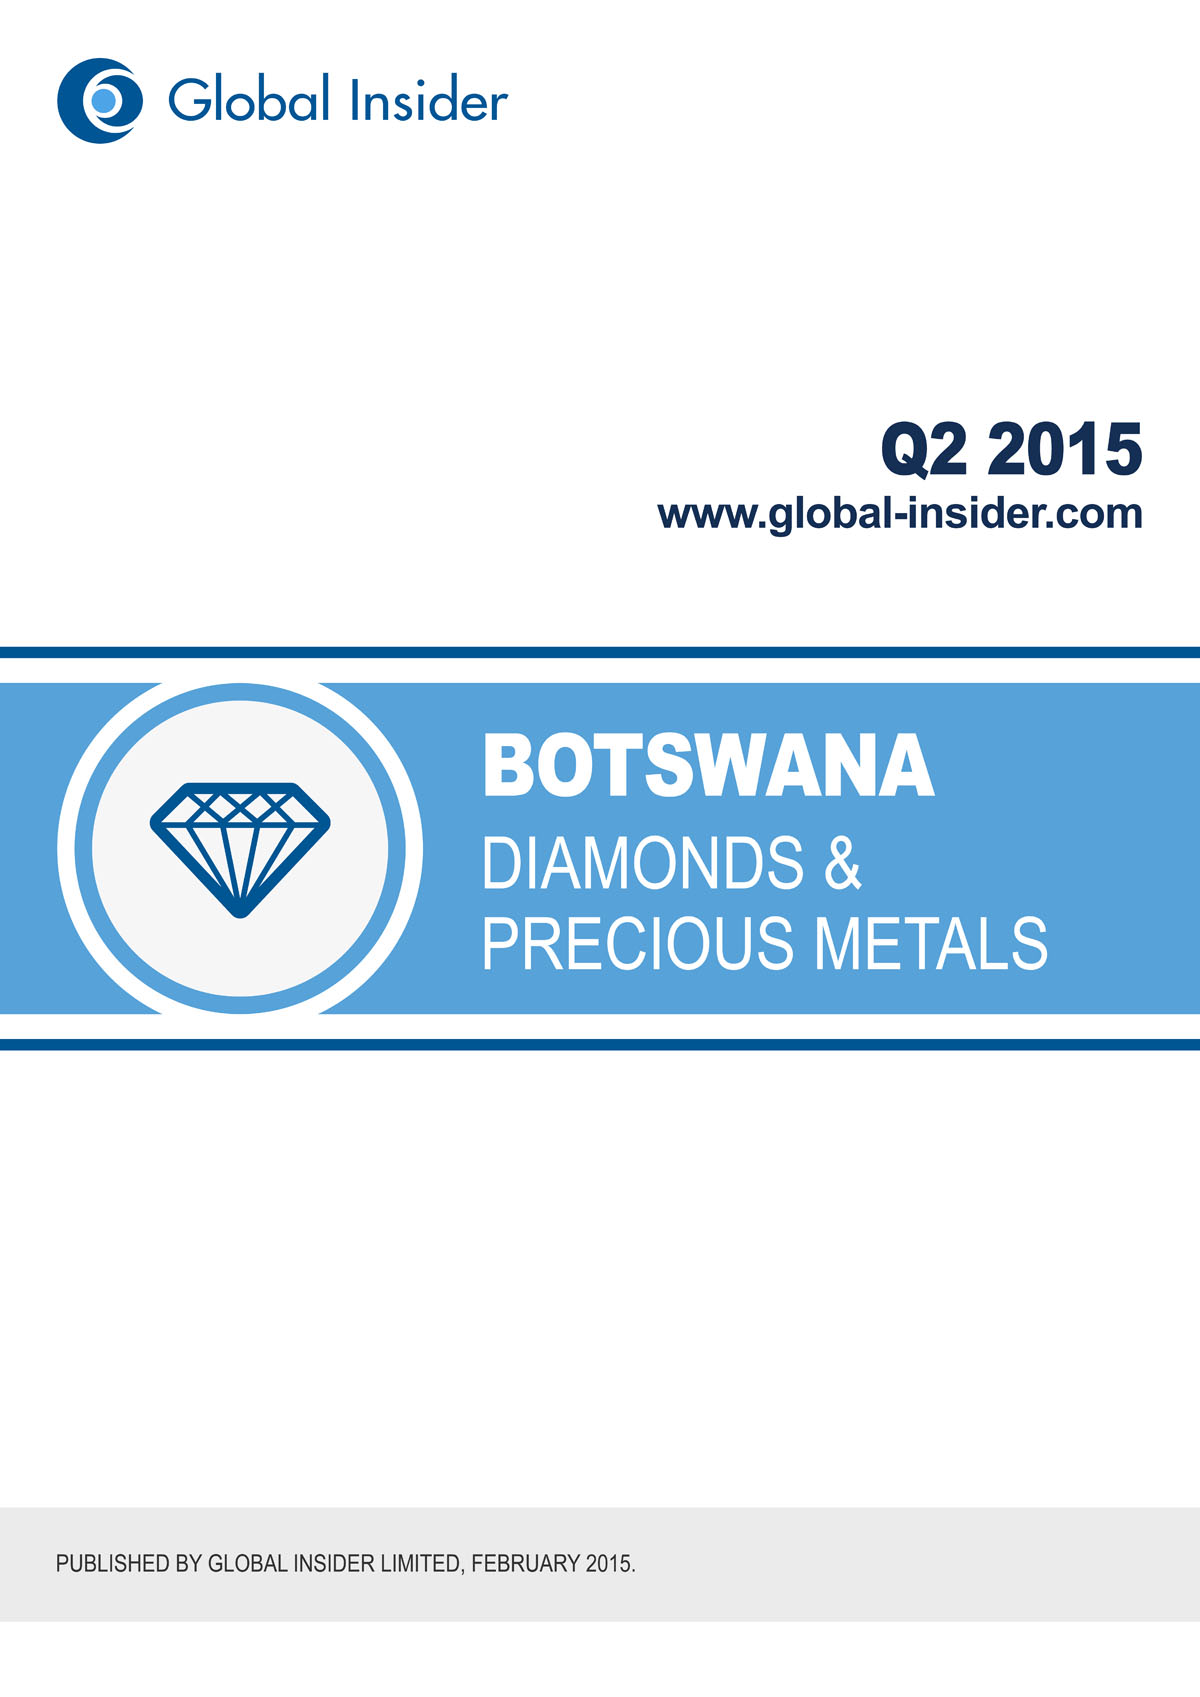 Botswana Diamonds & Precious Metals